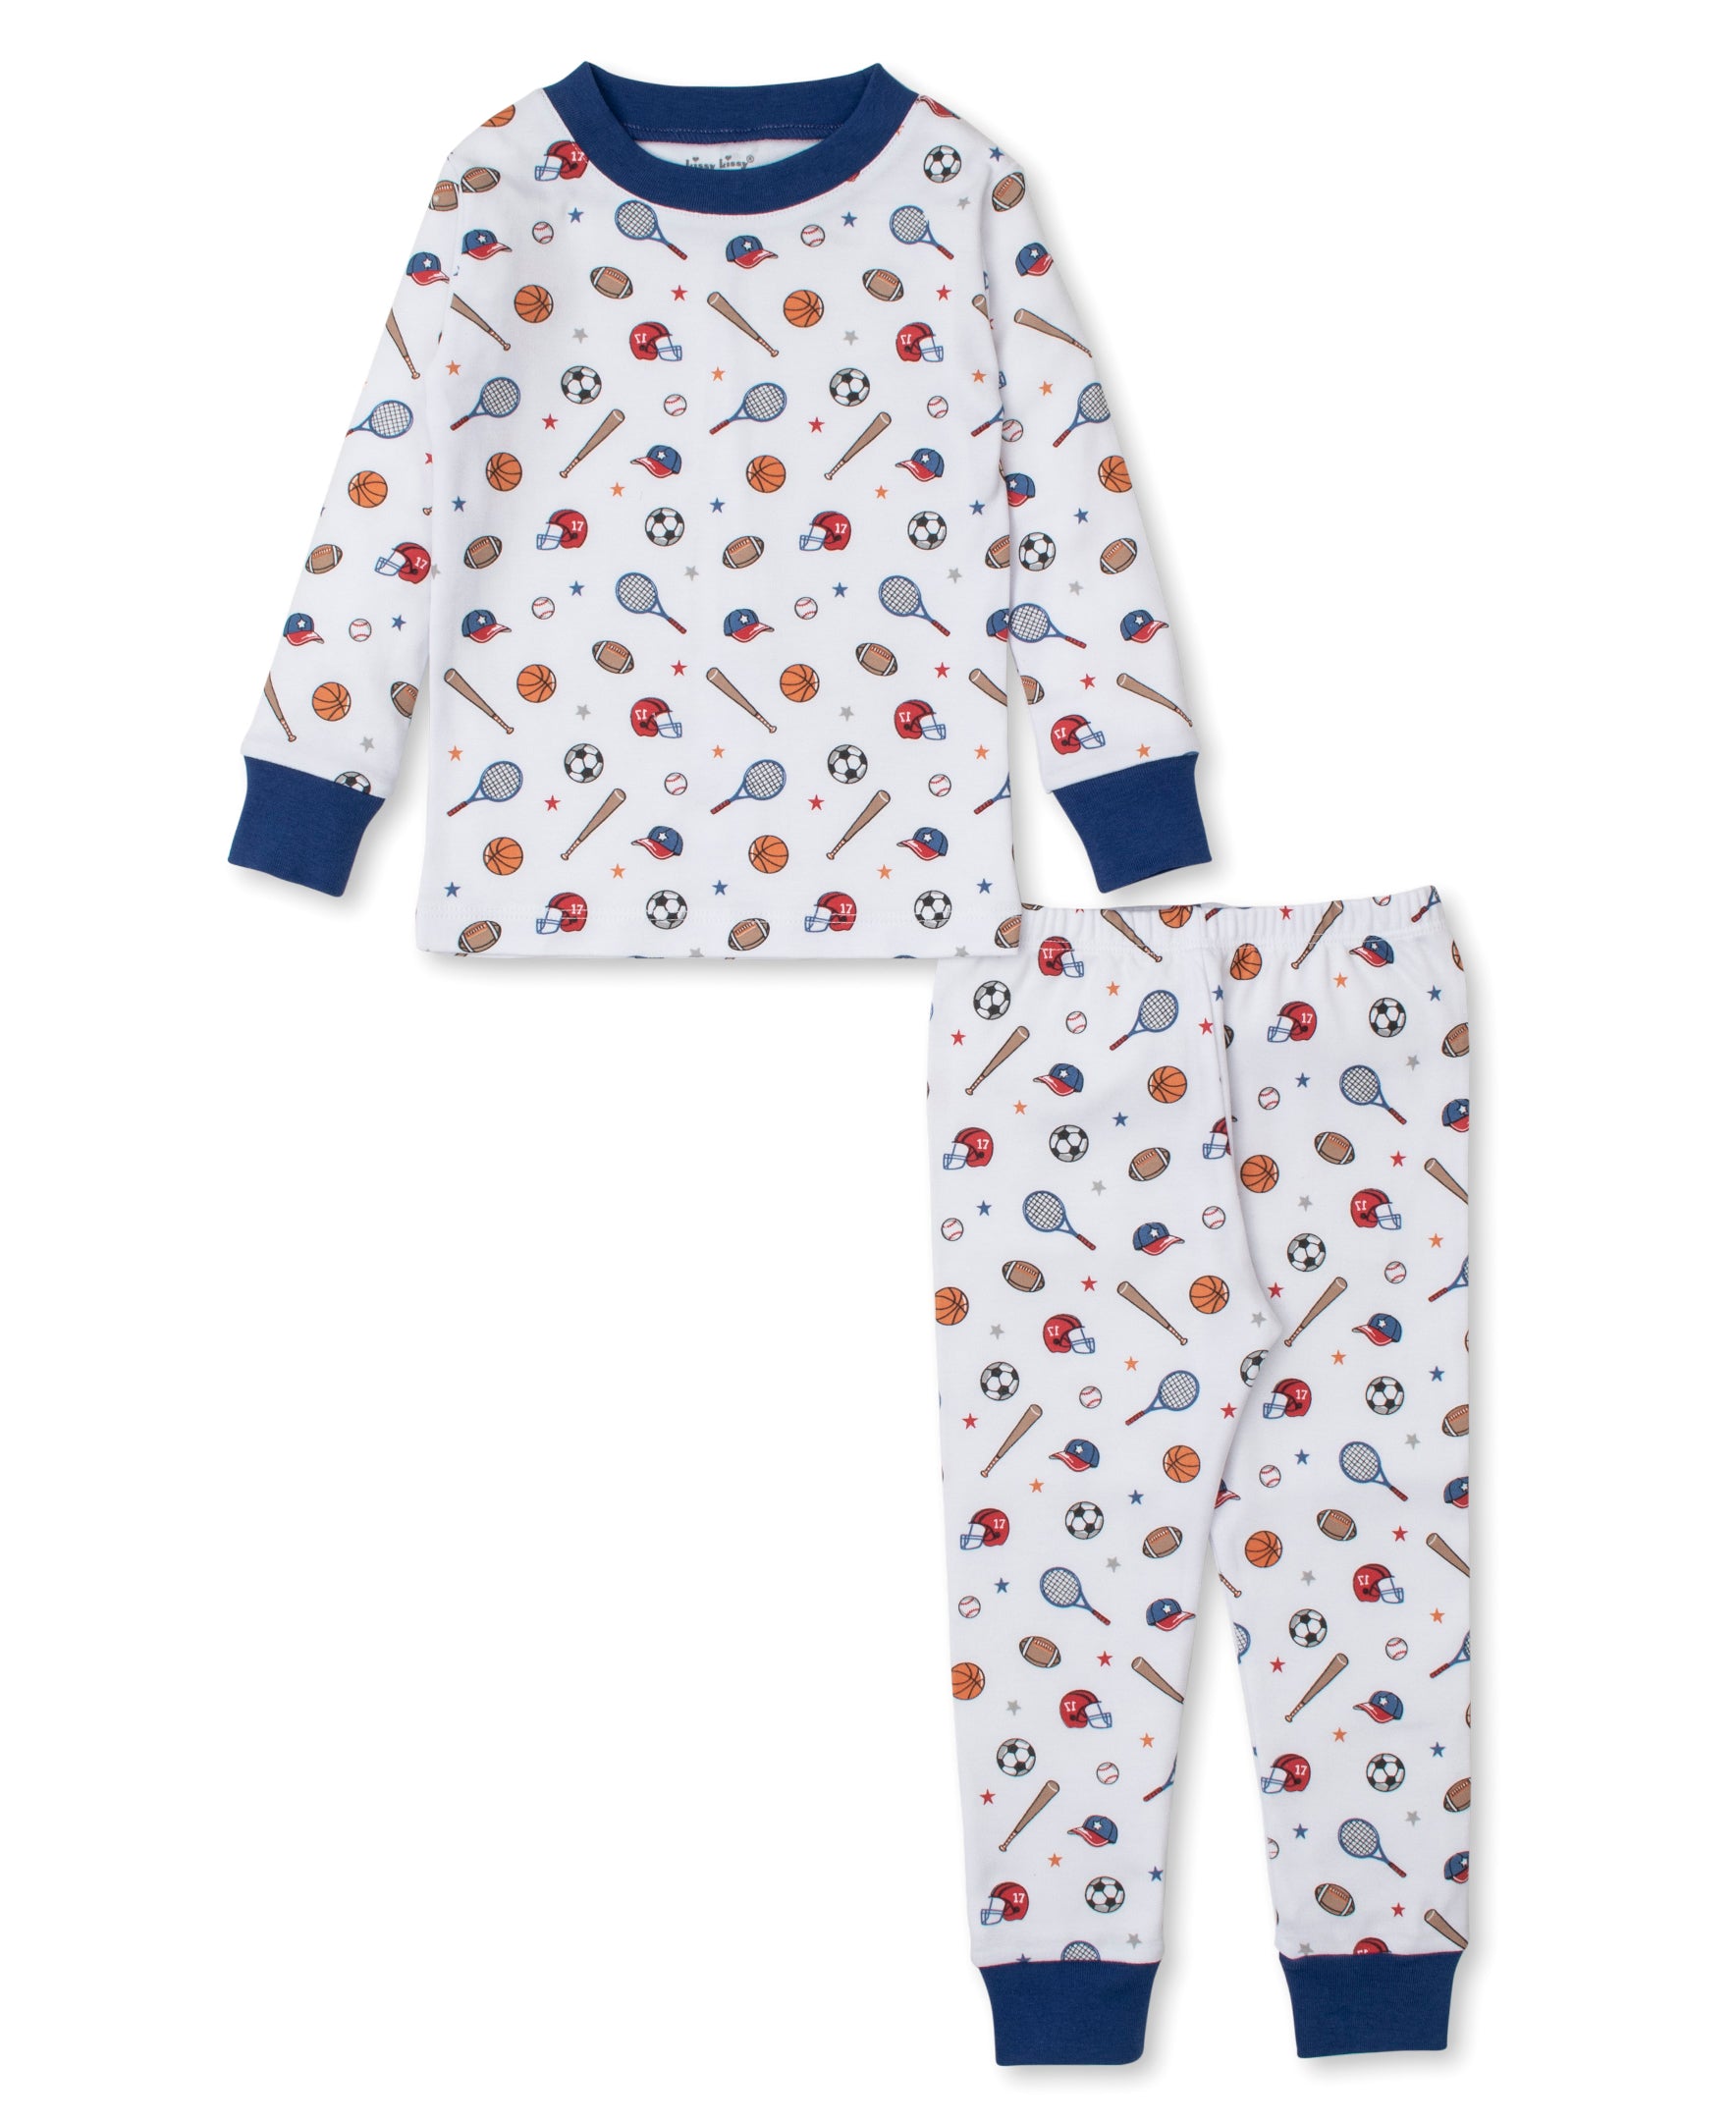 Sports Lineup Toddler Pajama Set - Kissy Kissy